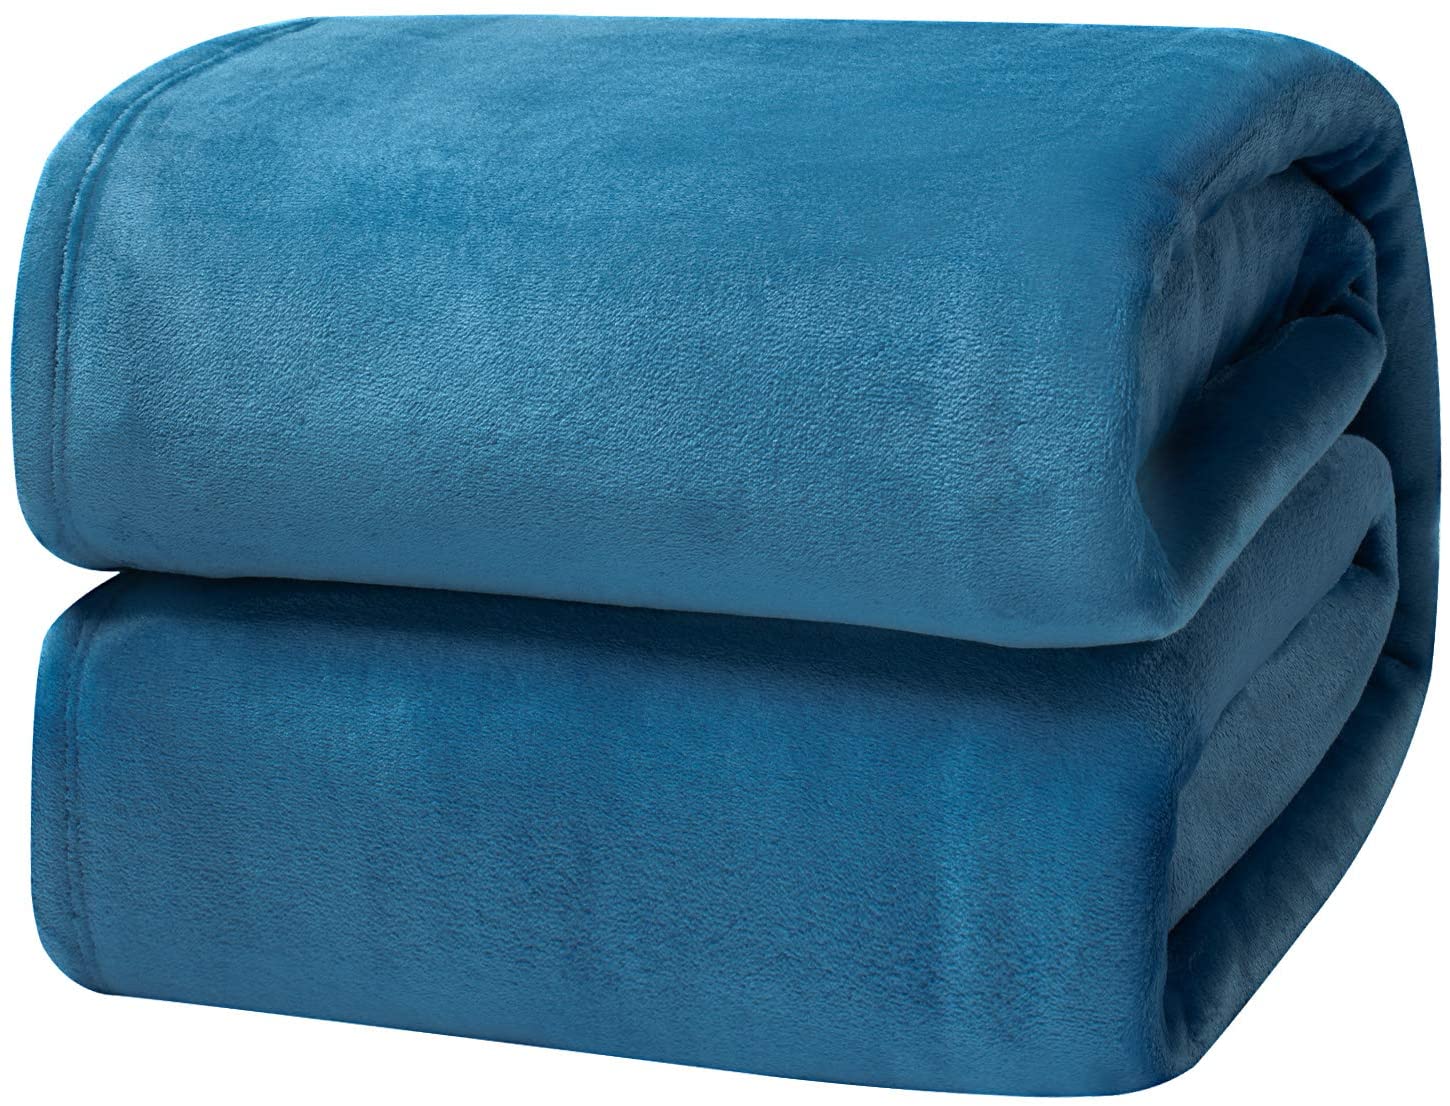 Bedsure Fleece Blanket Throw Size Grey Lightweight Super Soft Cozy Luxury Bed Bl 